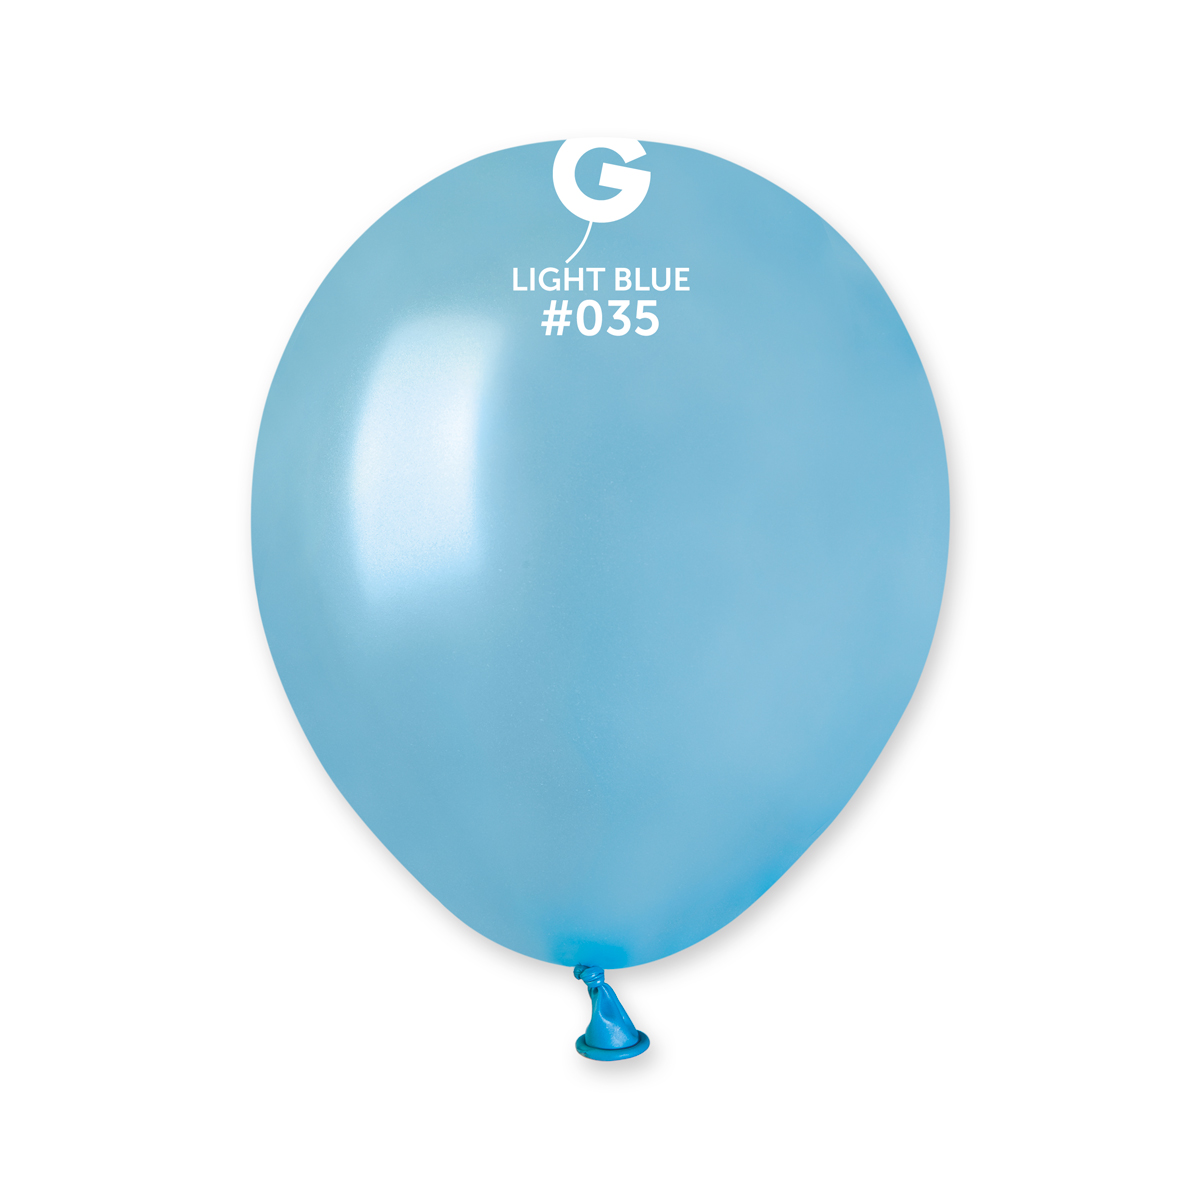 Gemar Balloons  Europe's largest latex balloon manufacturer